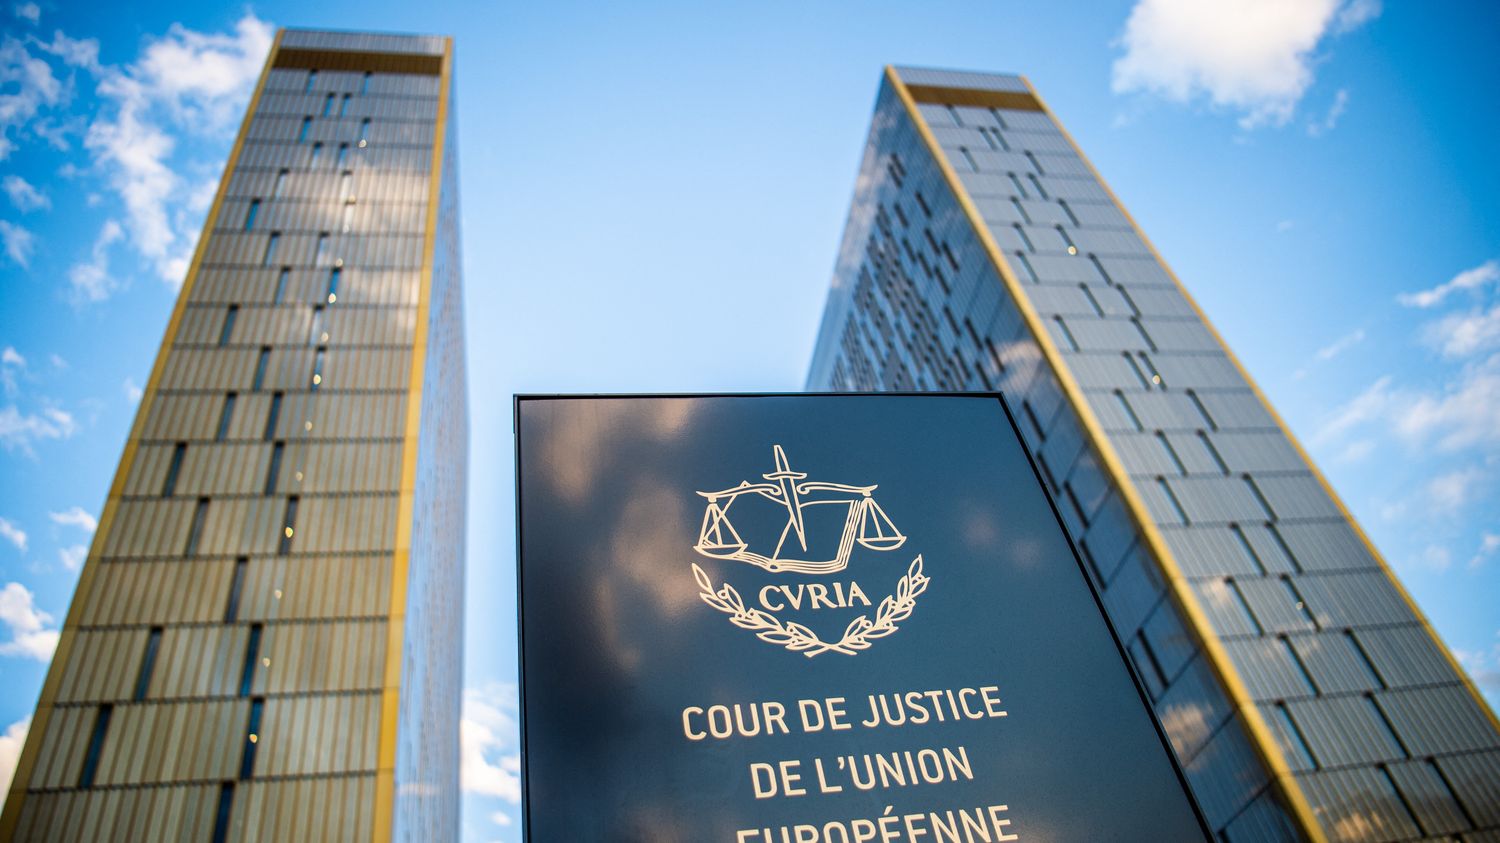 2019 Polish justice reform breaches EU law, says CJEU
